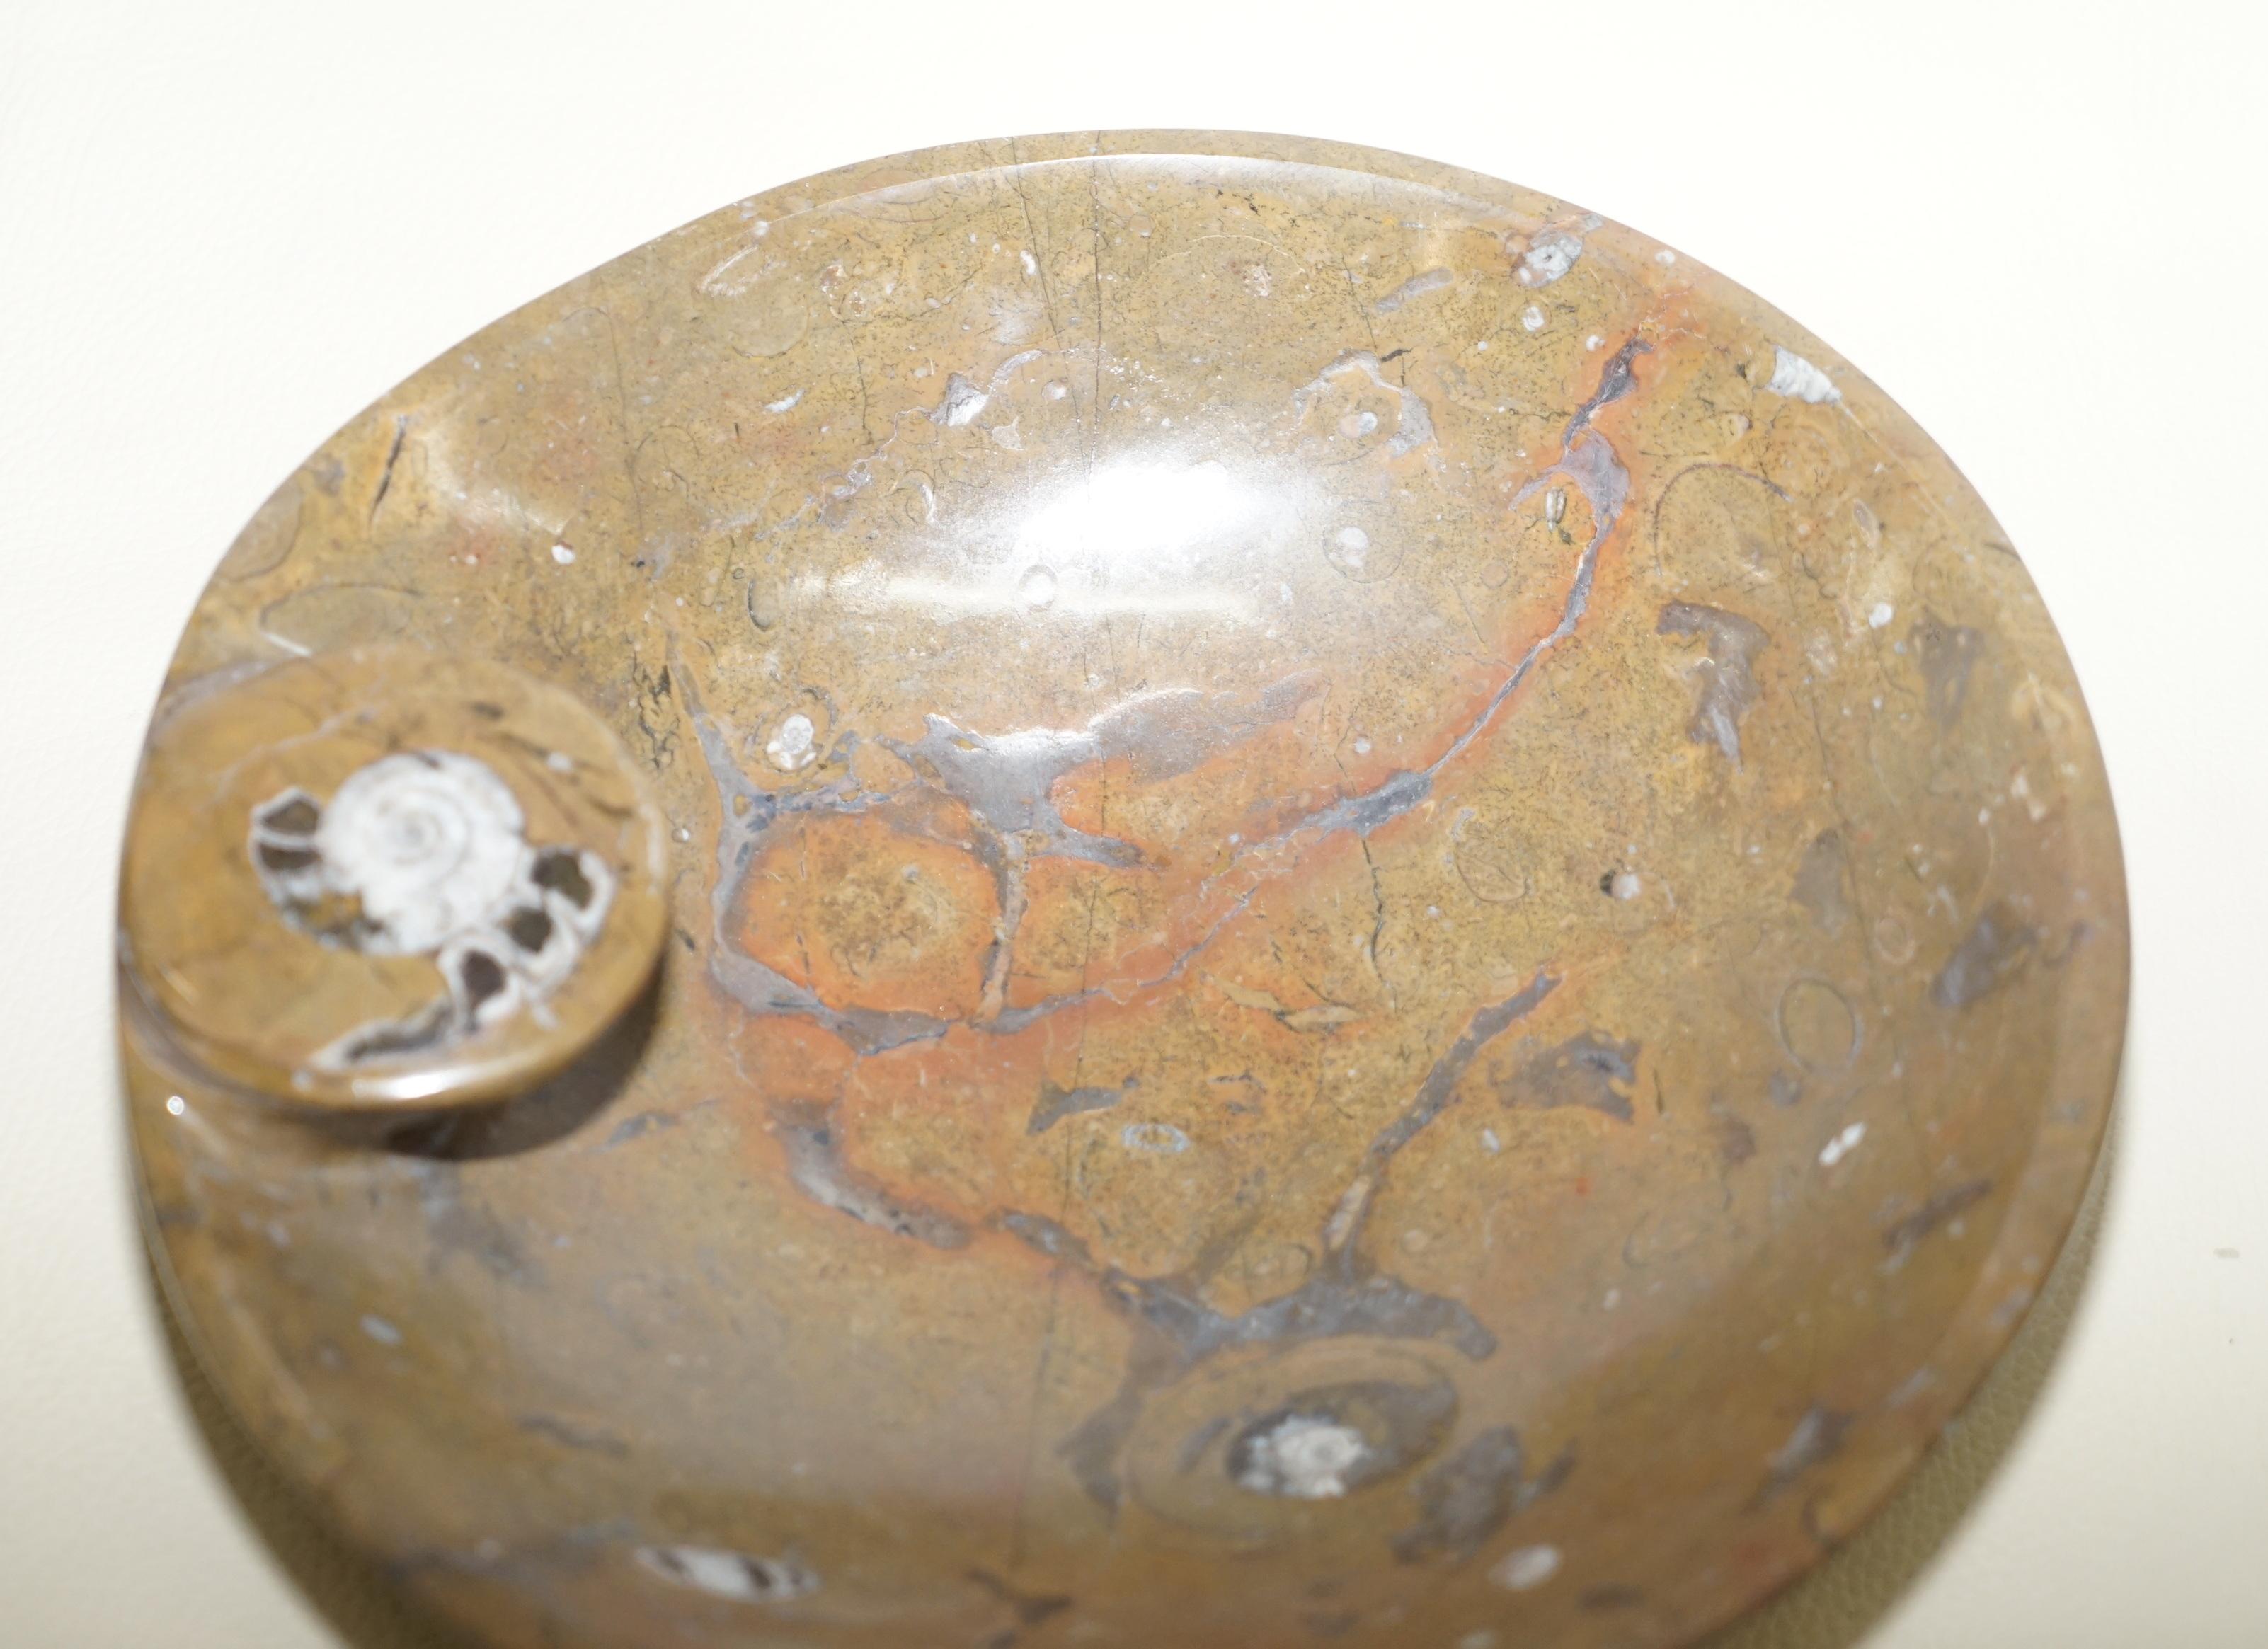 Marocain 1 des 4 très rares bols fossiles marocains Ammonite Atlas Mountains en marbre finition en vente